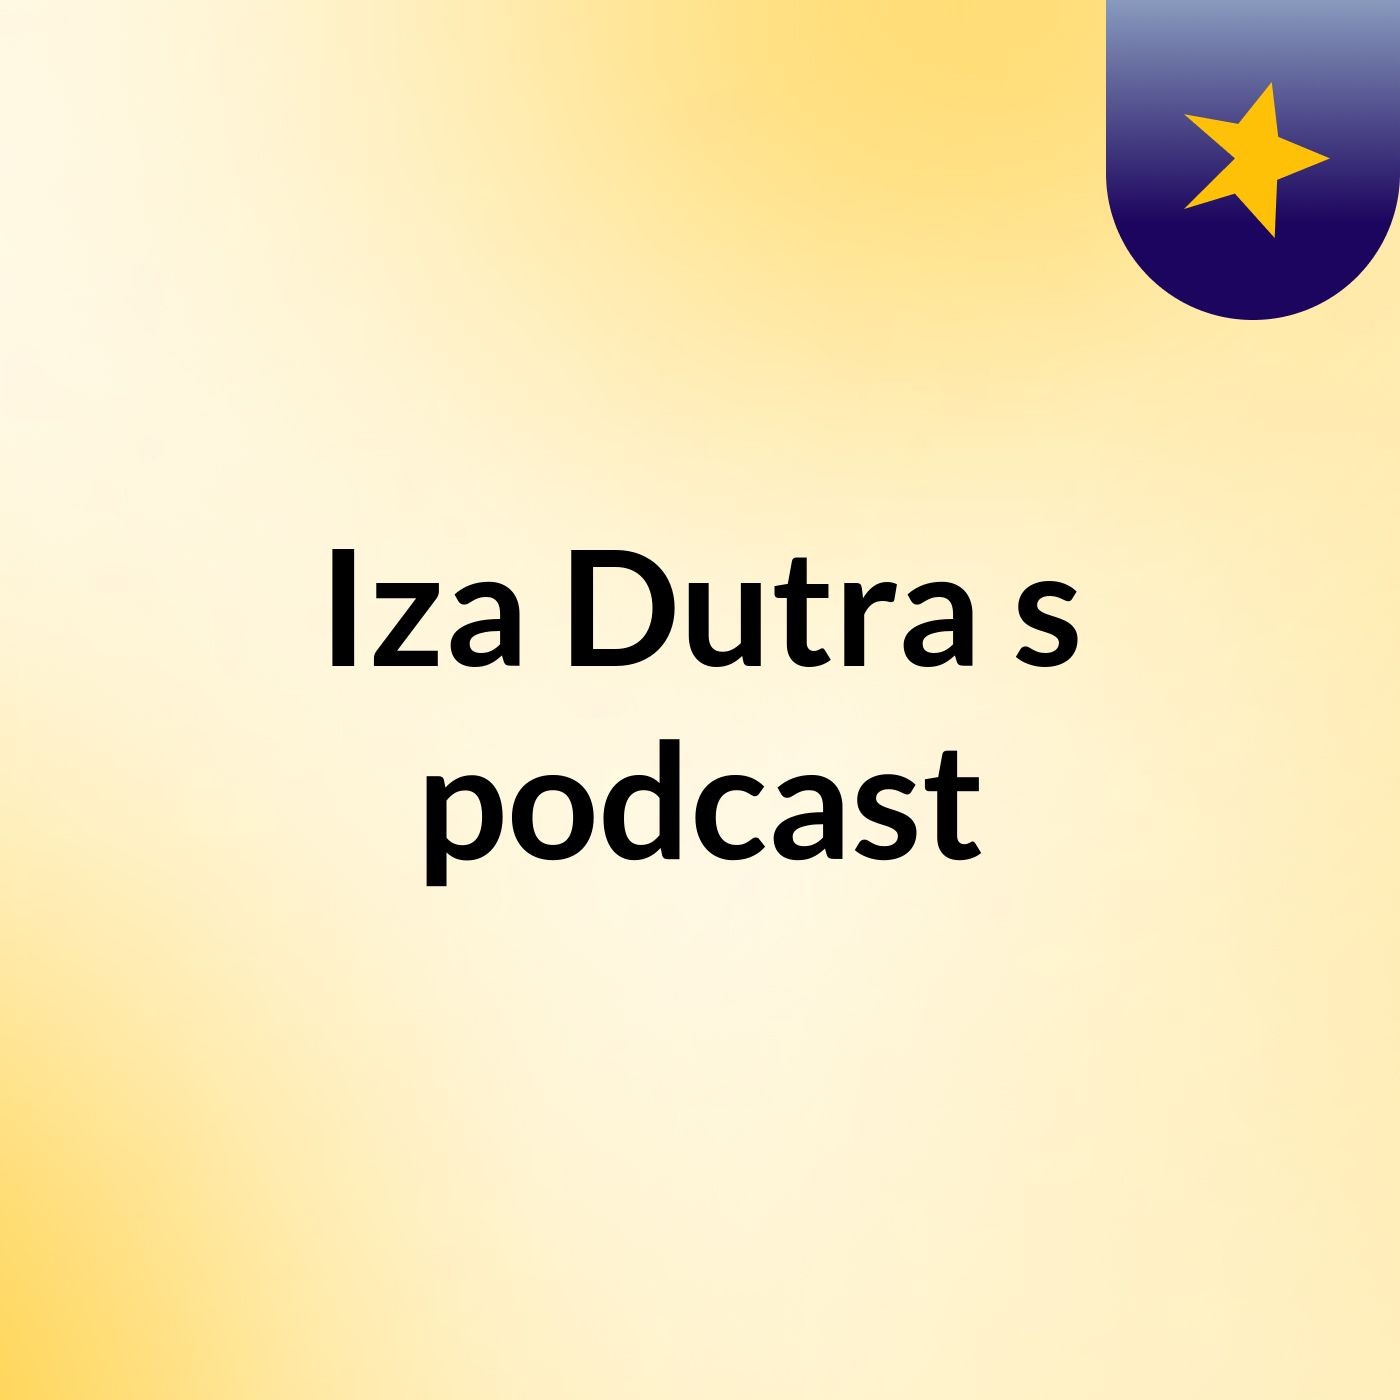 Iza Dutra's podcast